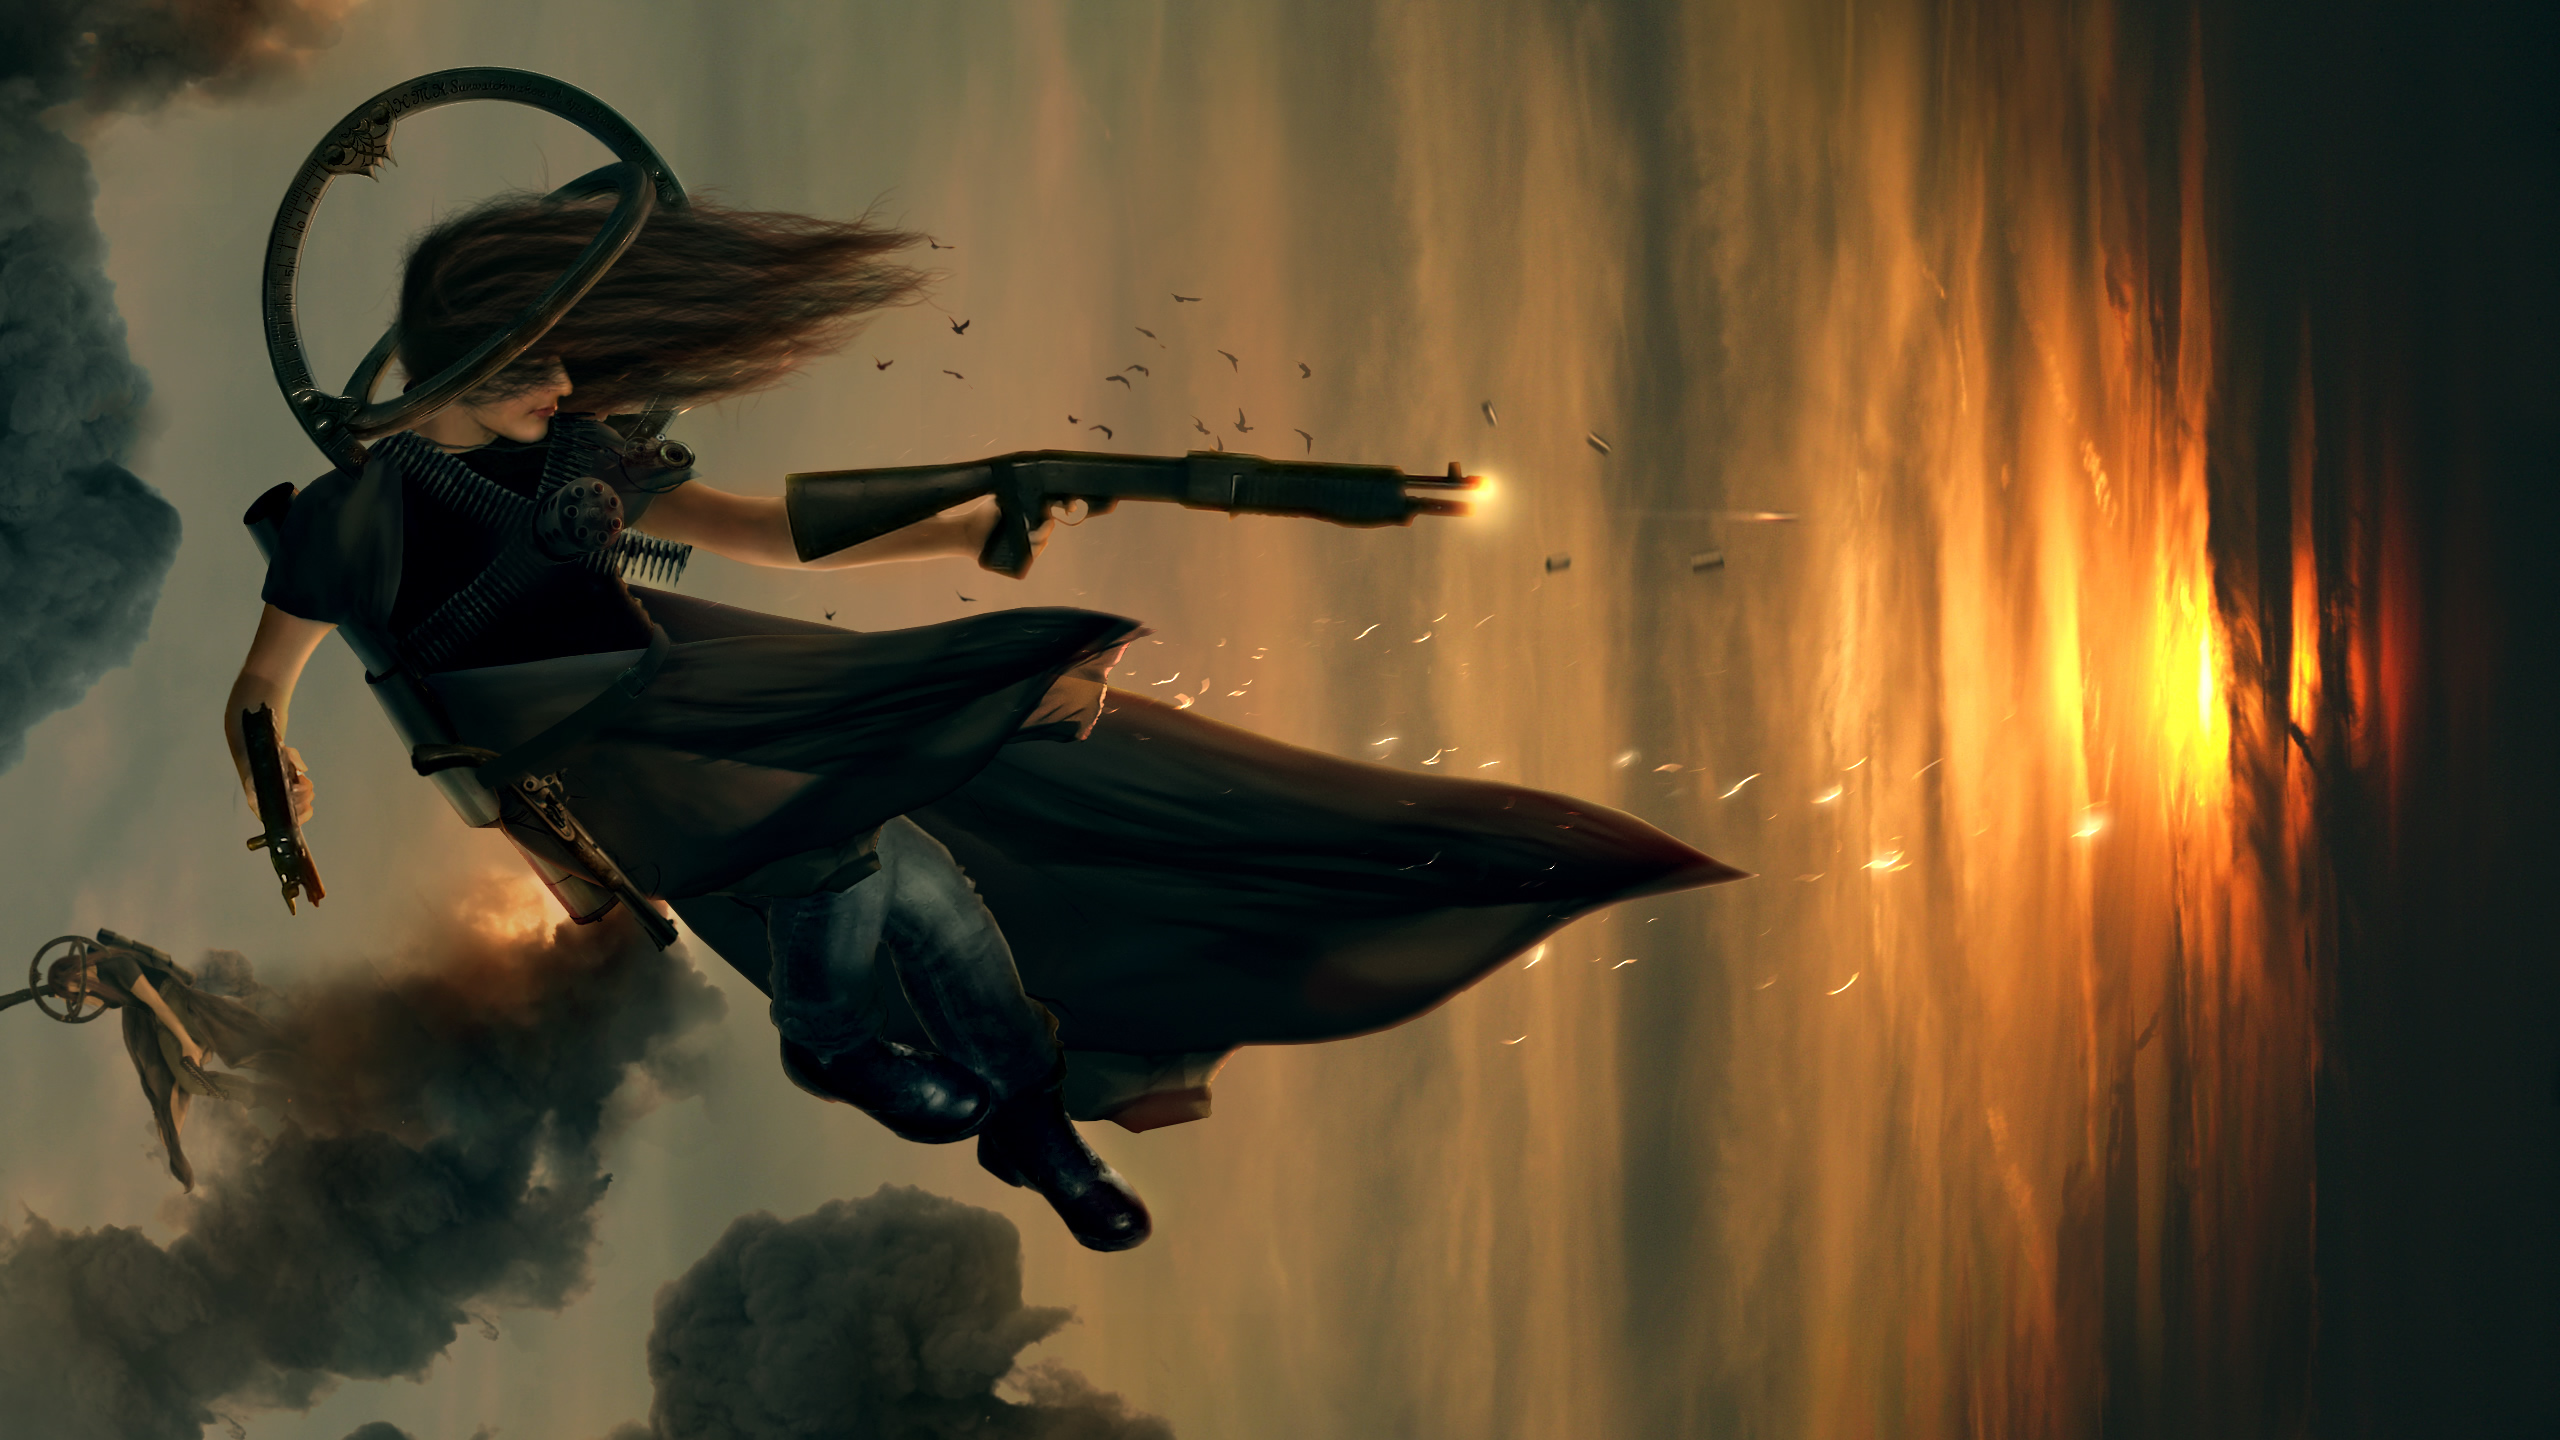 Sci-fi women warrior with a shotgun, created by Erik Schumacher - desktop wallpaper.